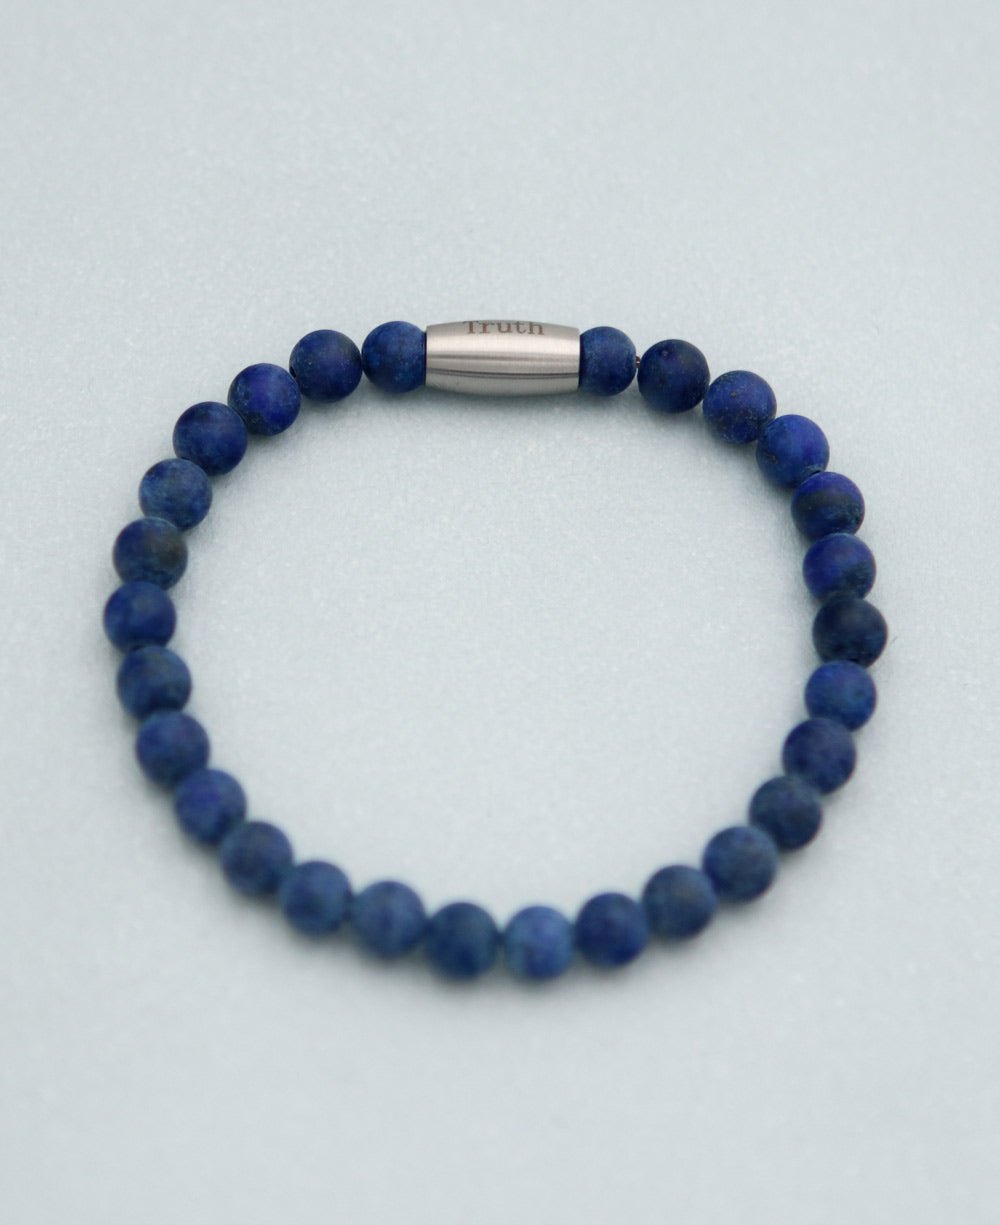 Inspirational Gemstone Bracelets for Men - Agate